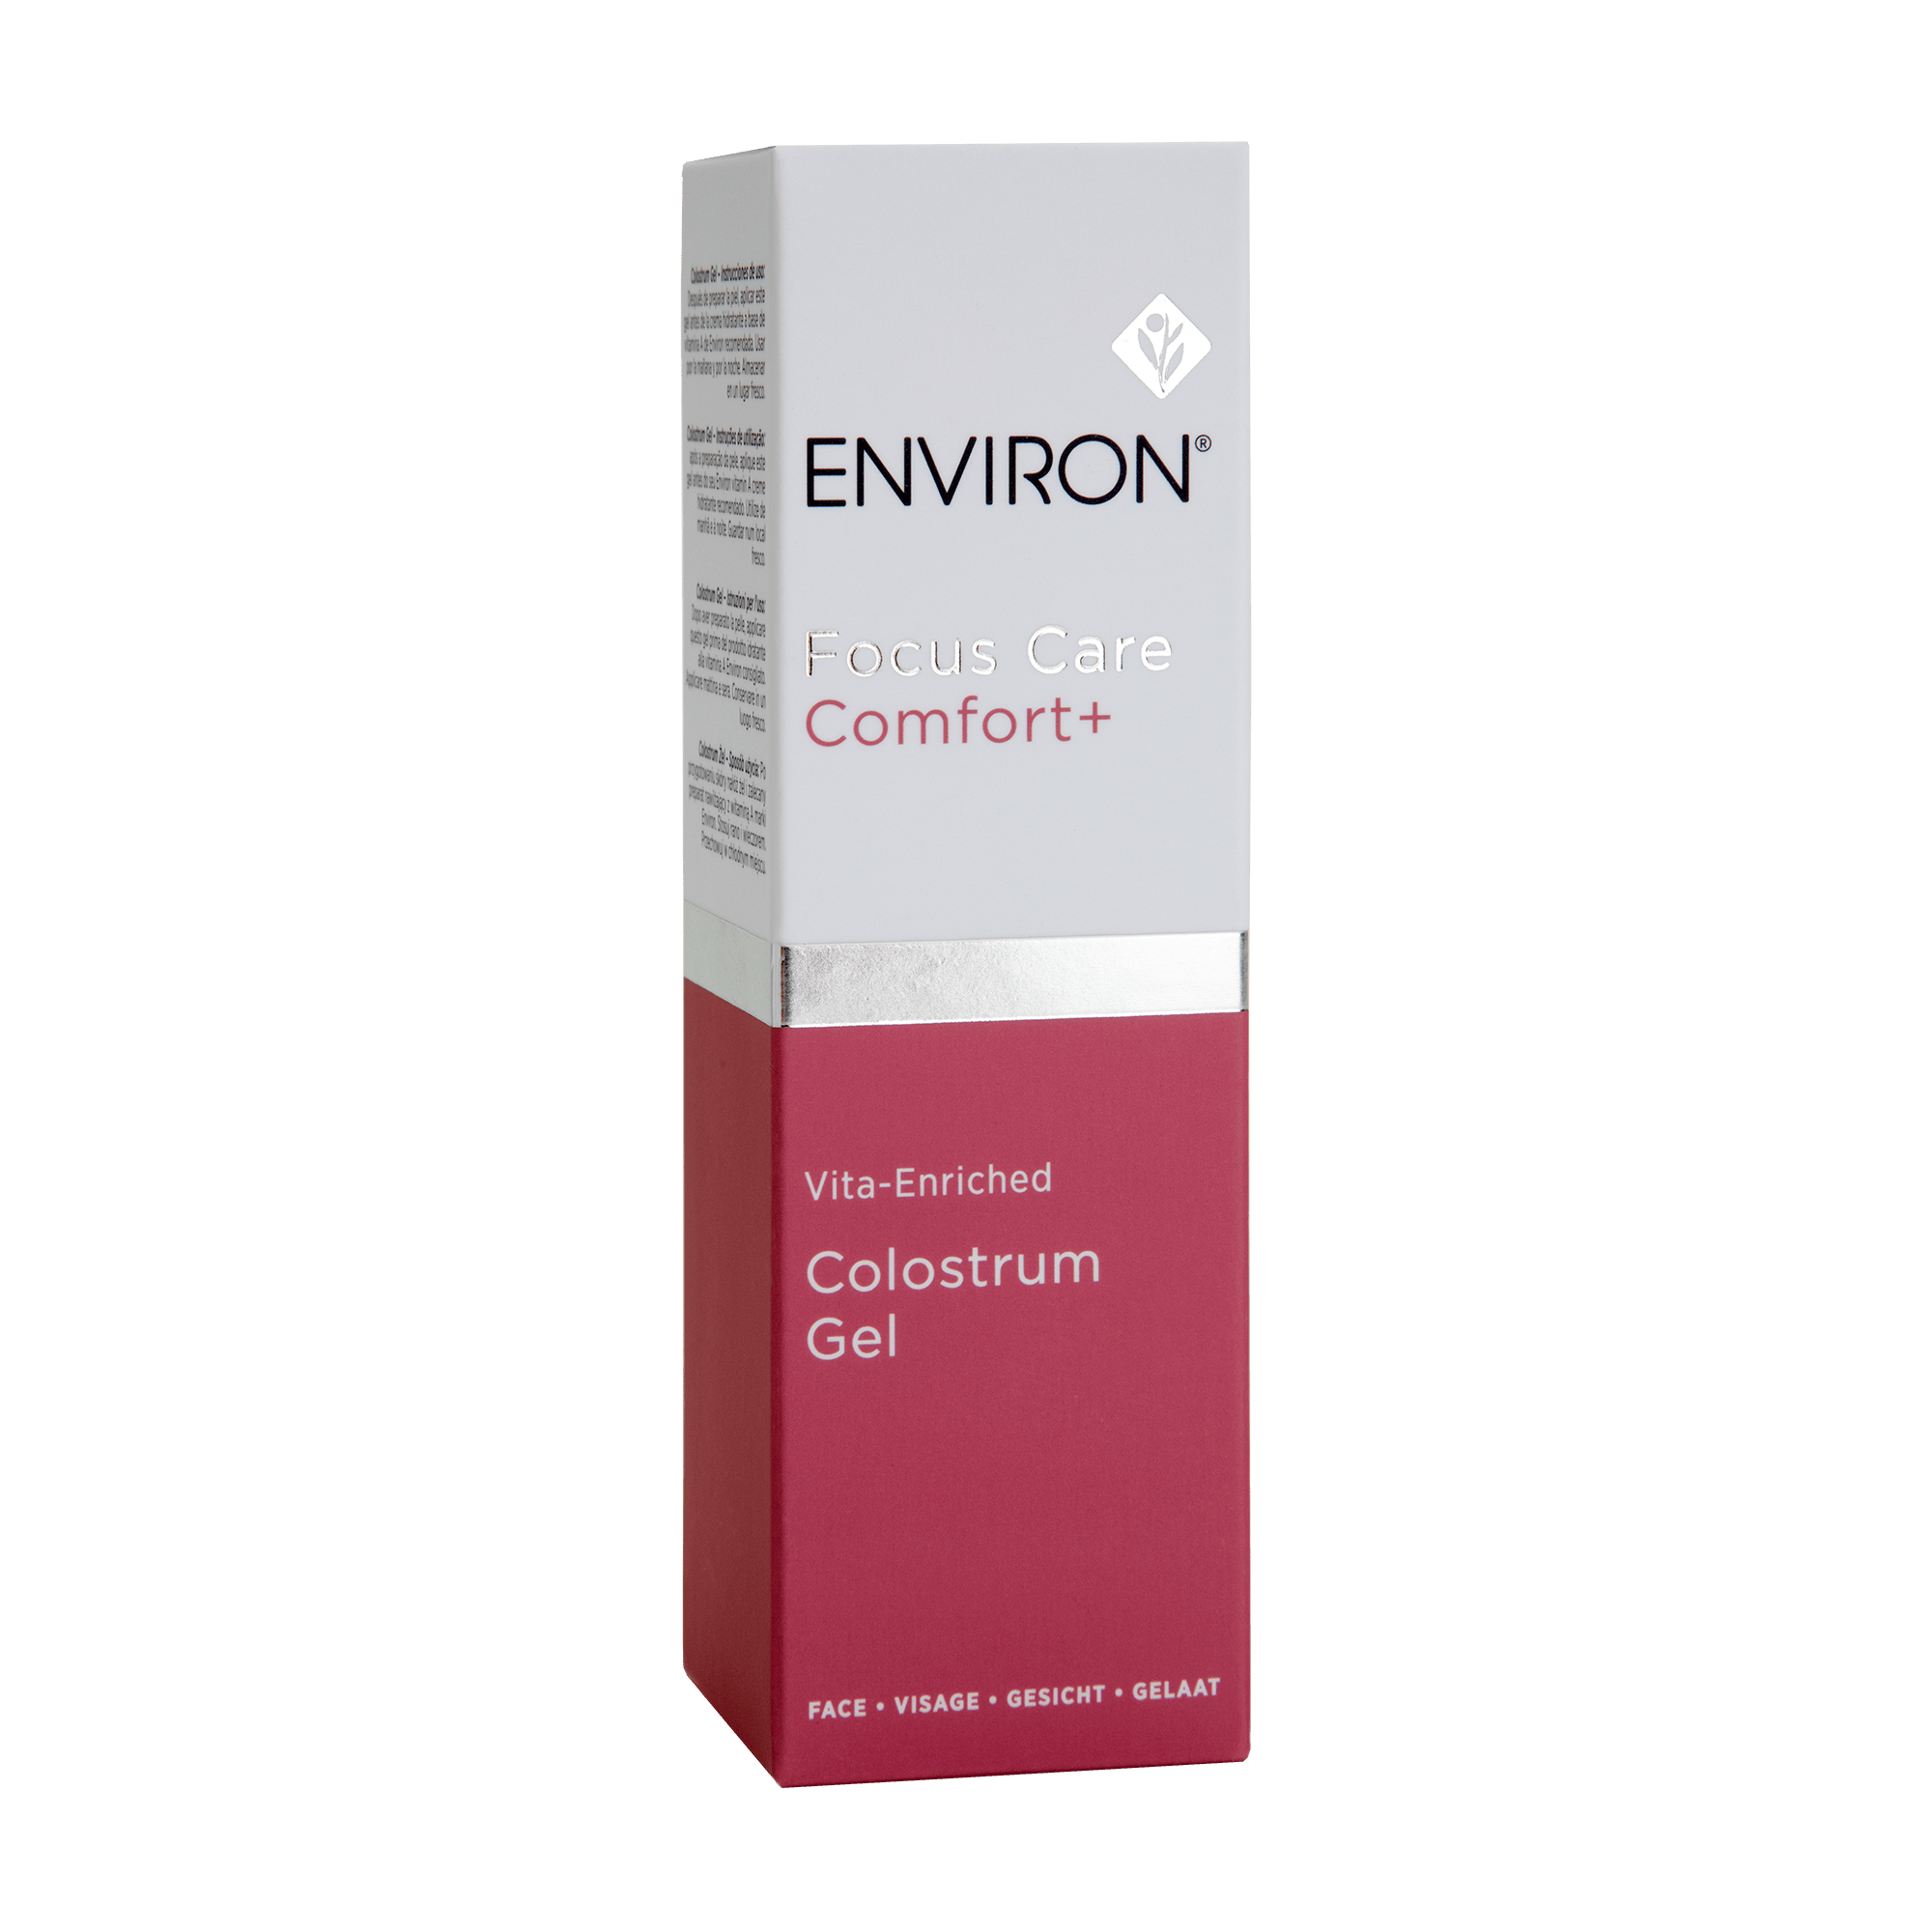 Vita-Enriched Colostrum Gel | Comfort+ | Environ